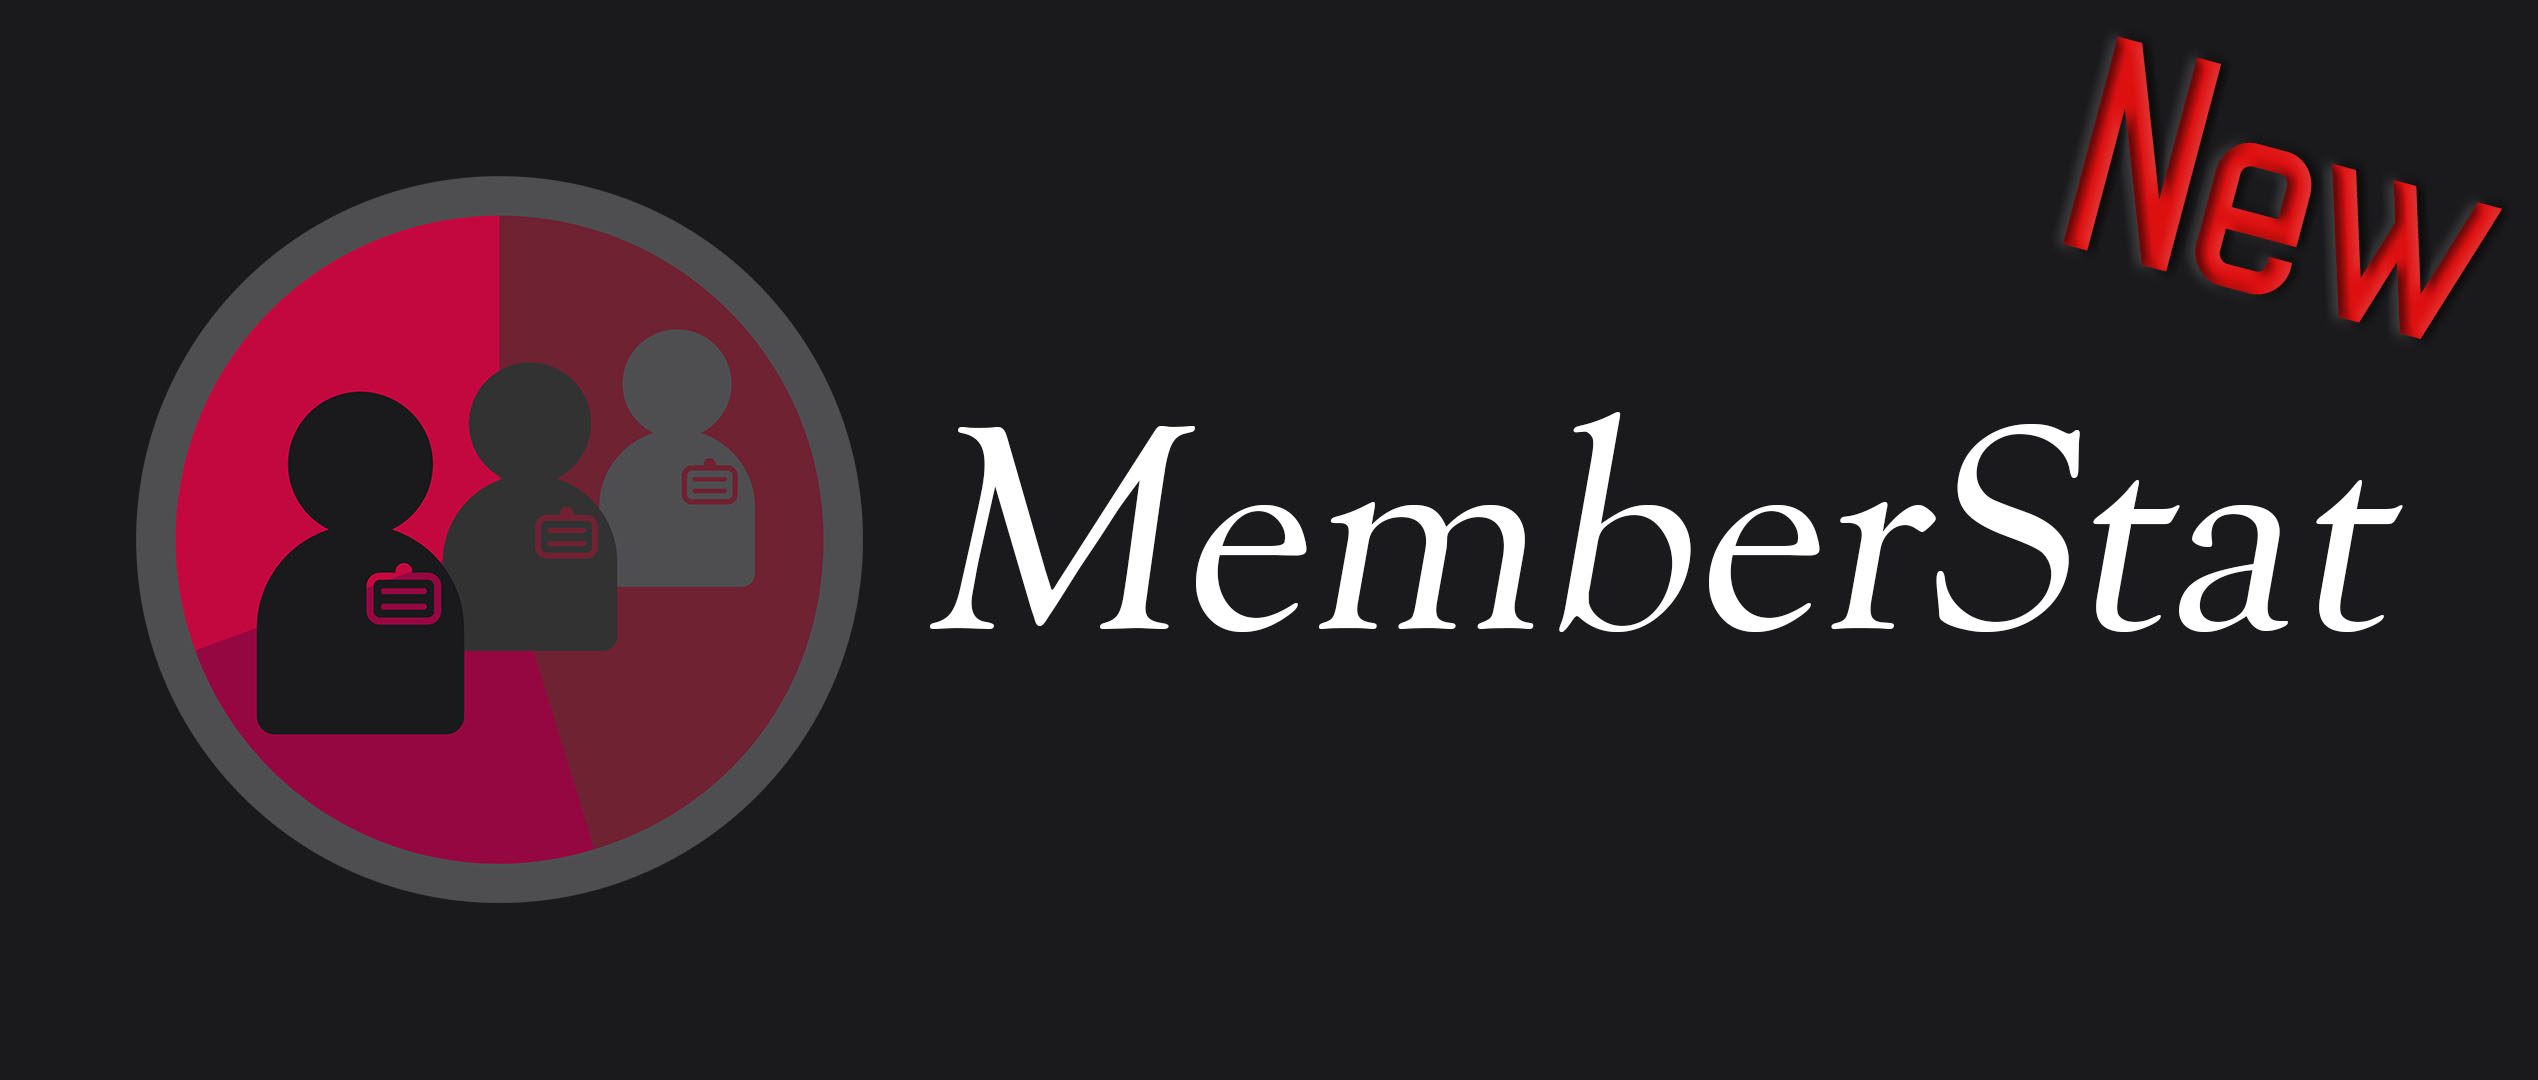 Gérer vos membres avec MemberStat